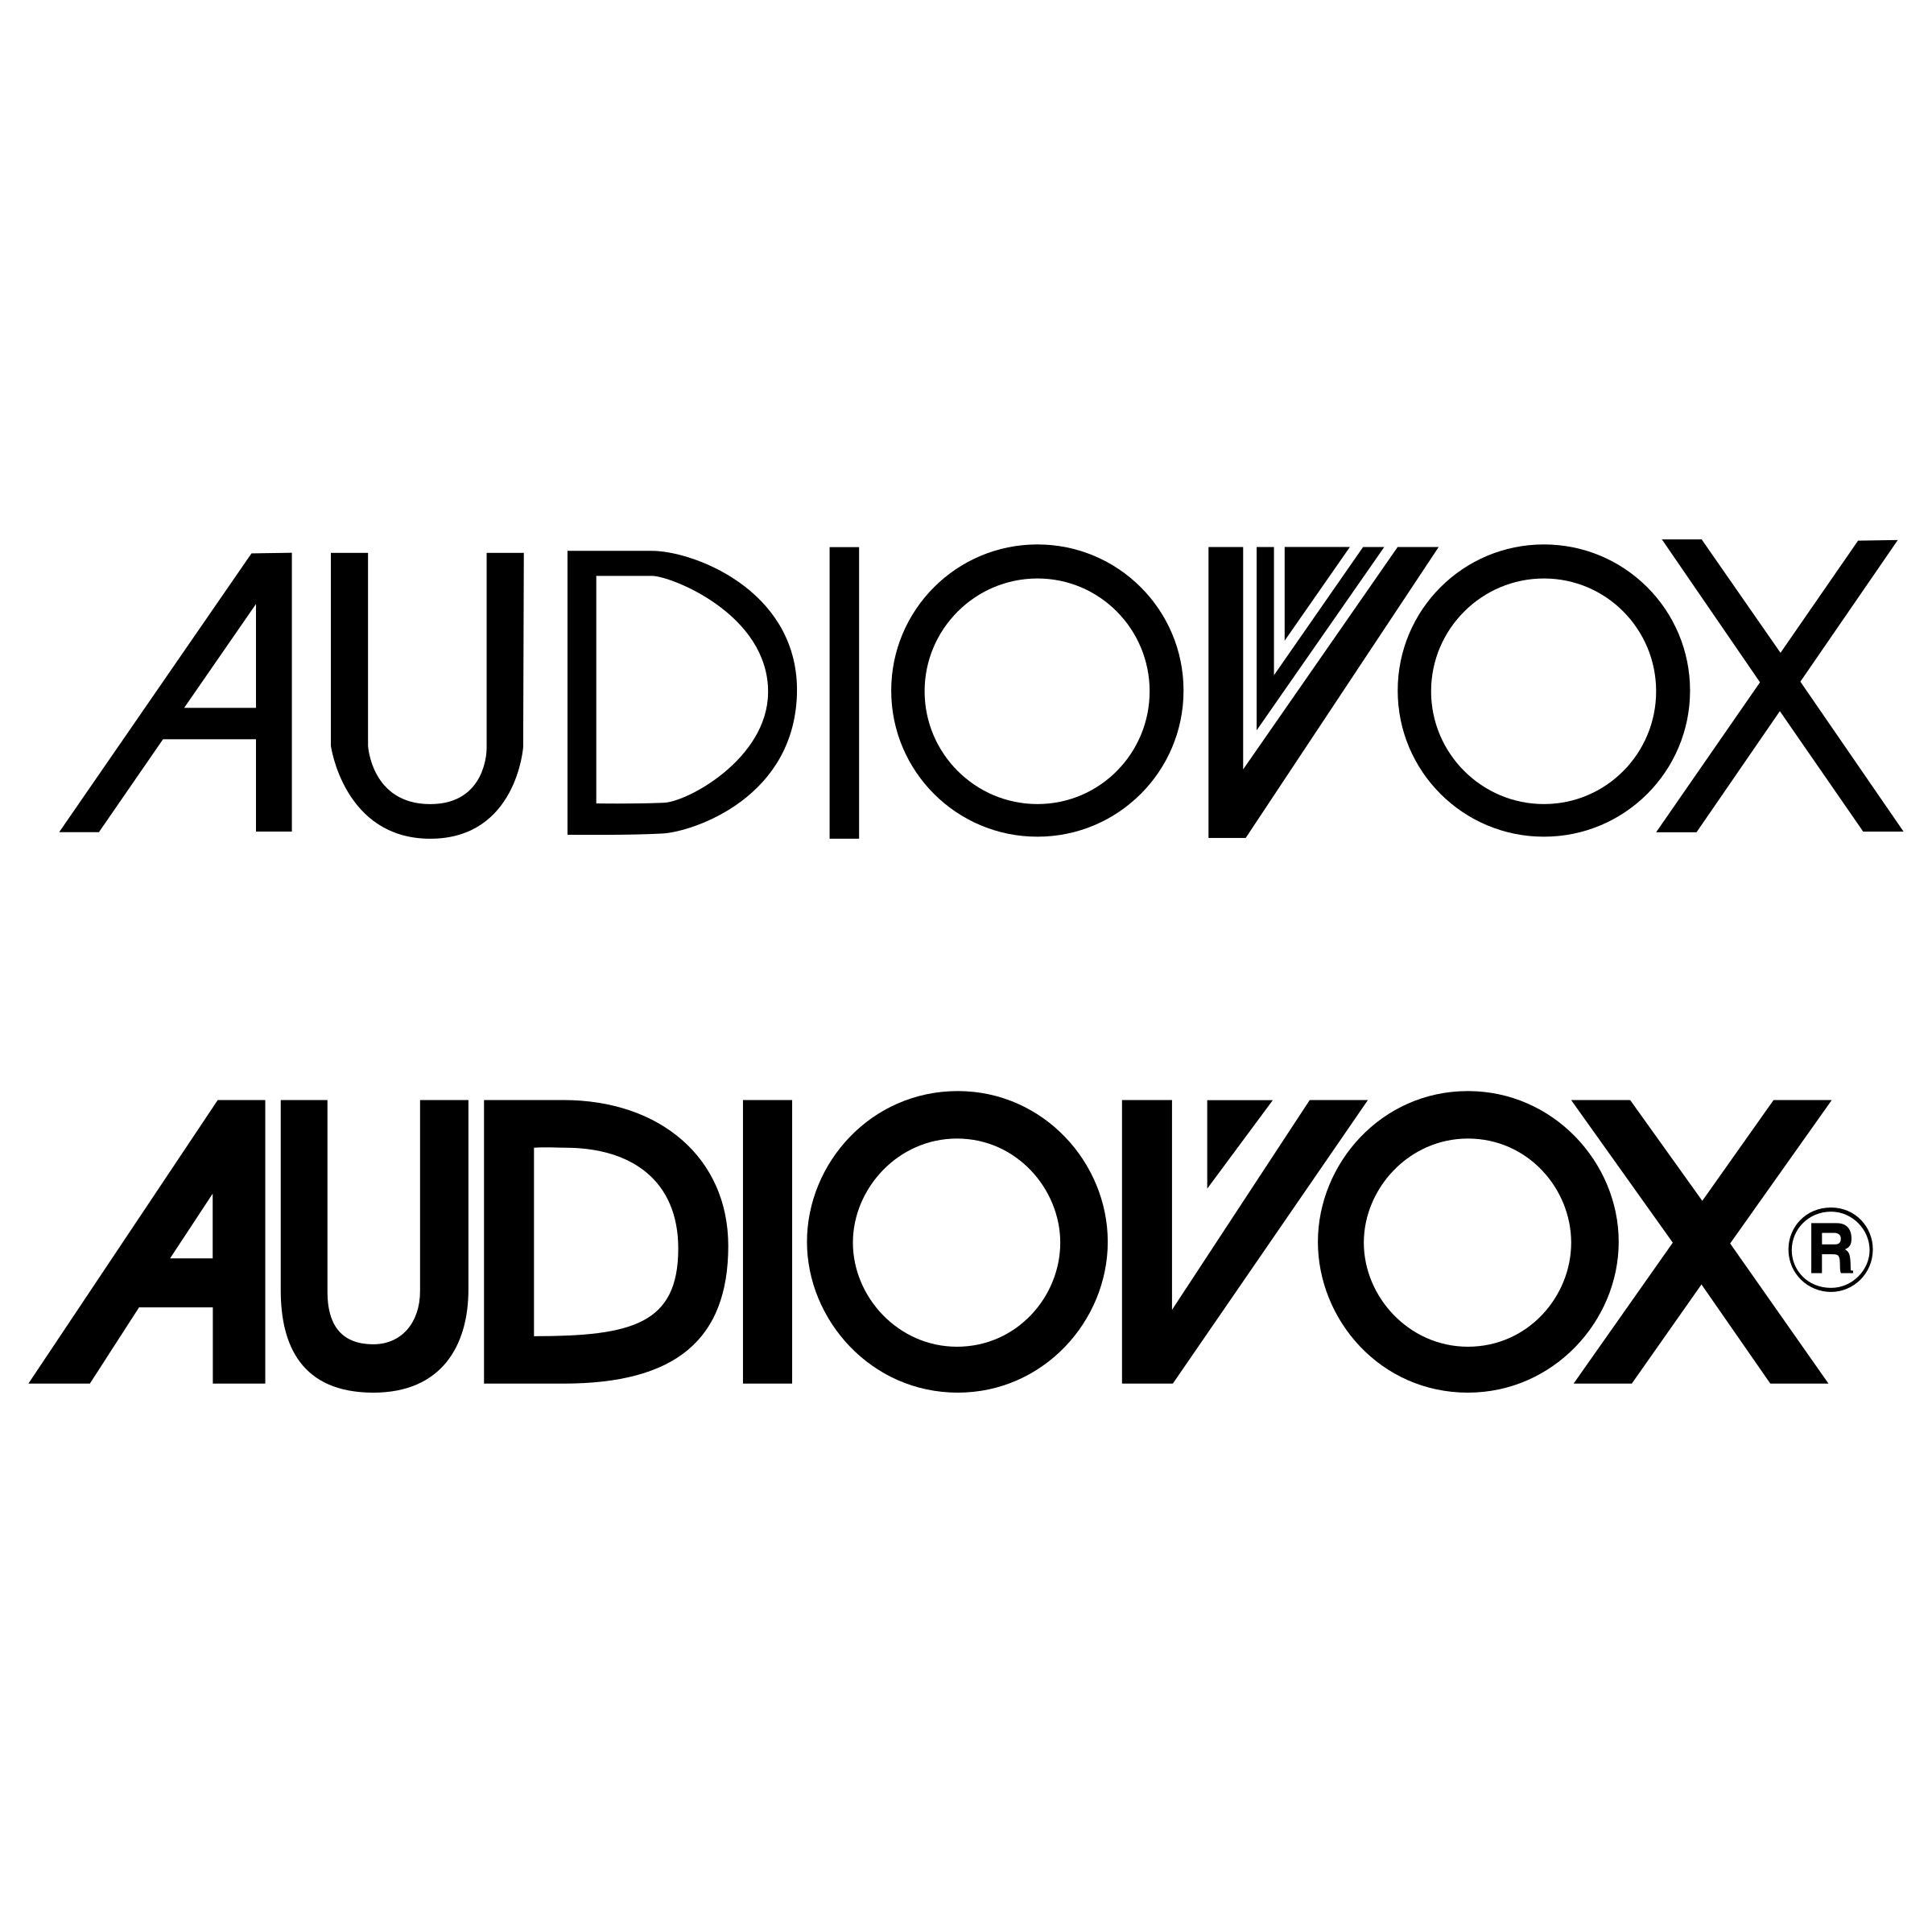 Audiovox Logo - Audiovox Logo PNG Transparent & SVG Vector - Freebie Supply